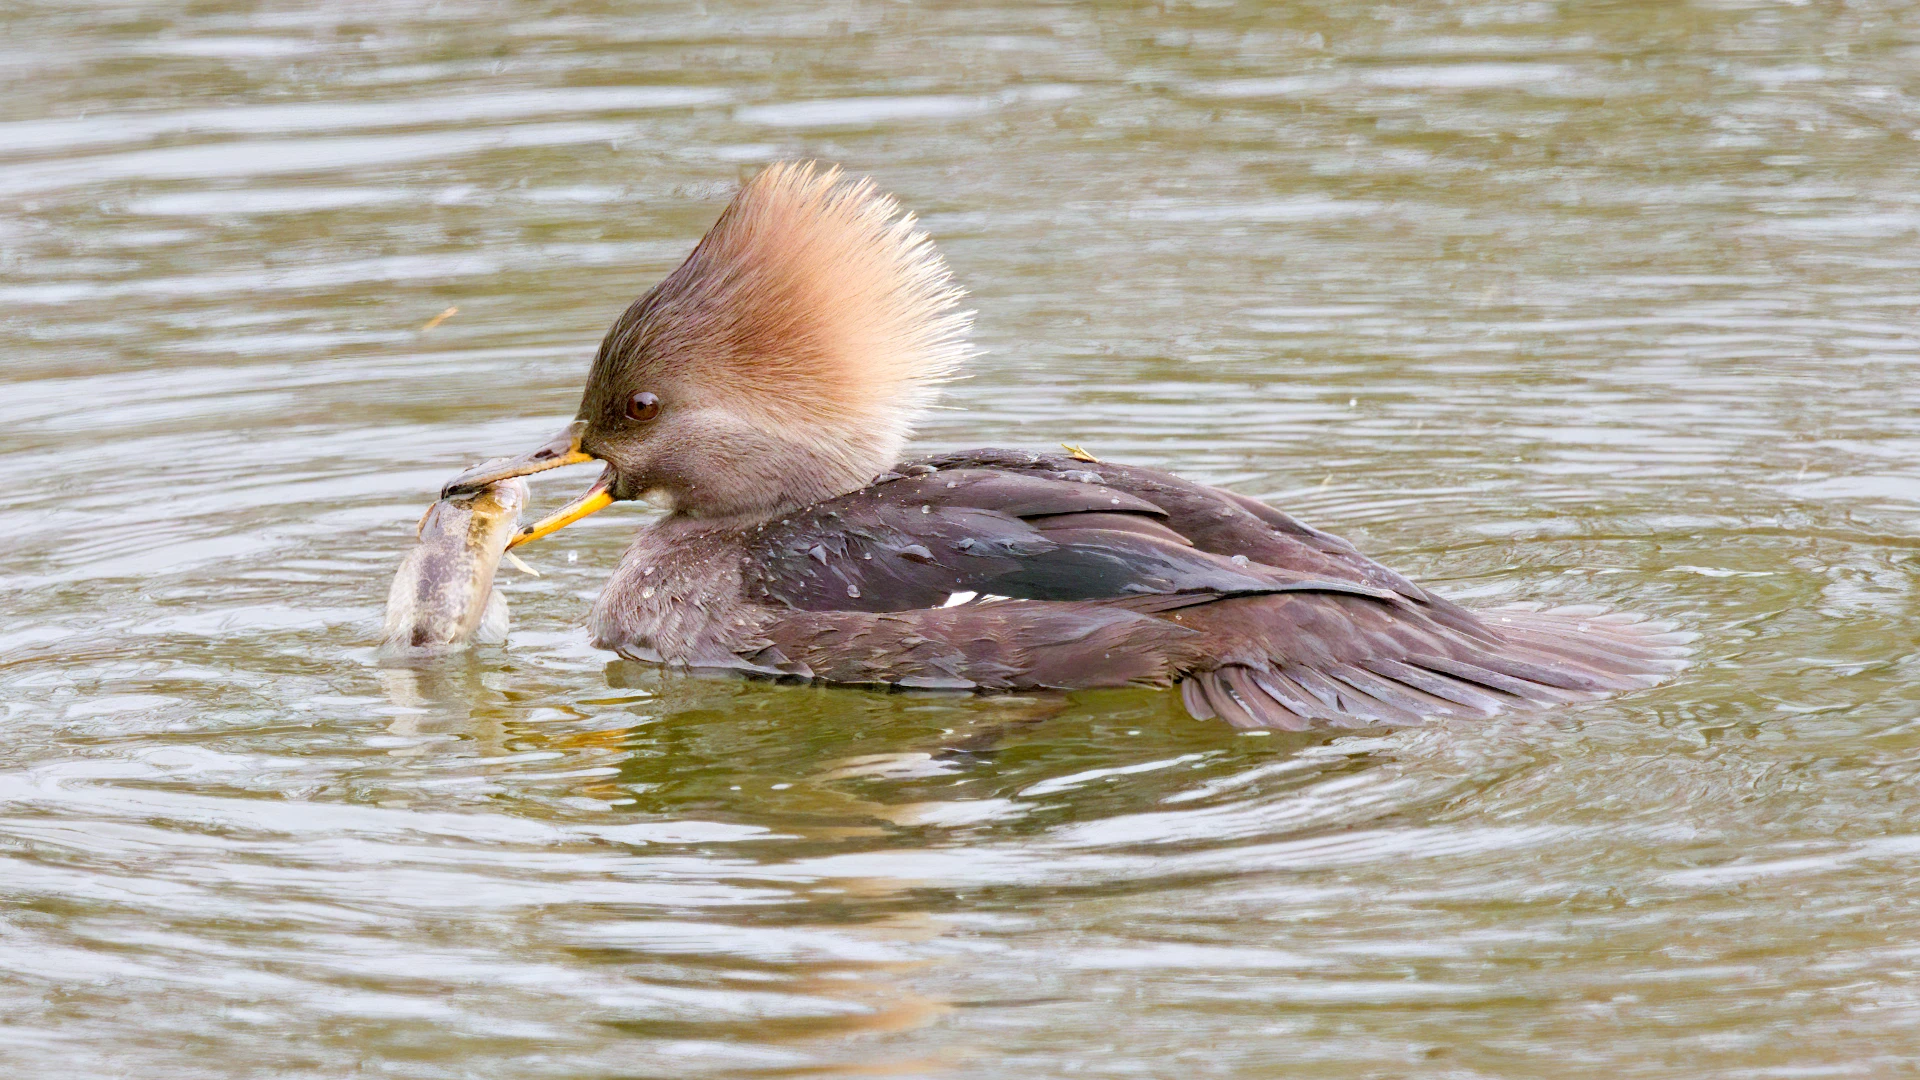 A hooded merganser eating a fish.